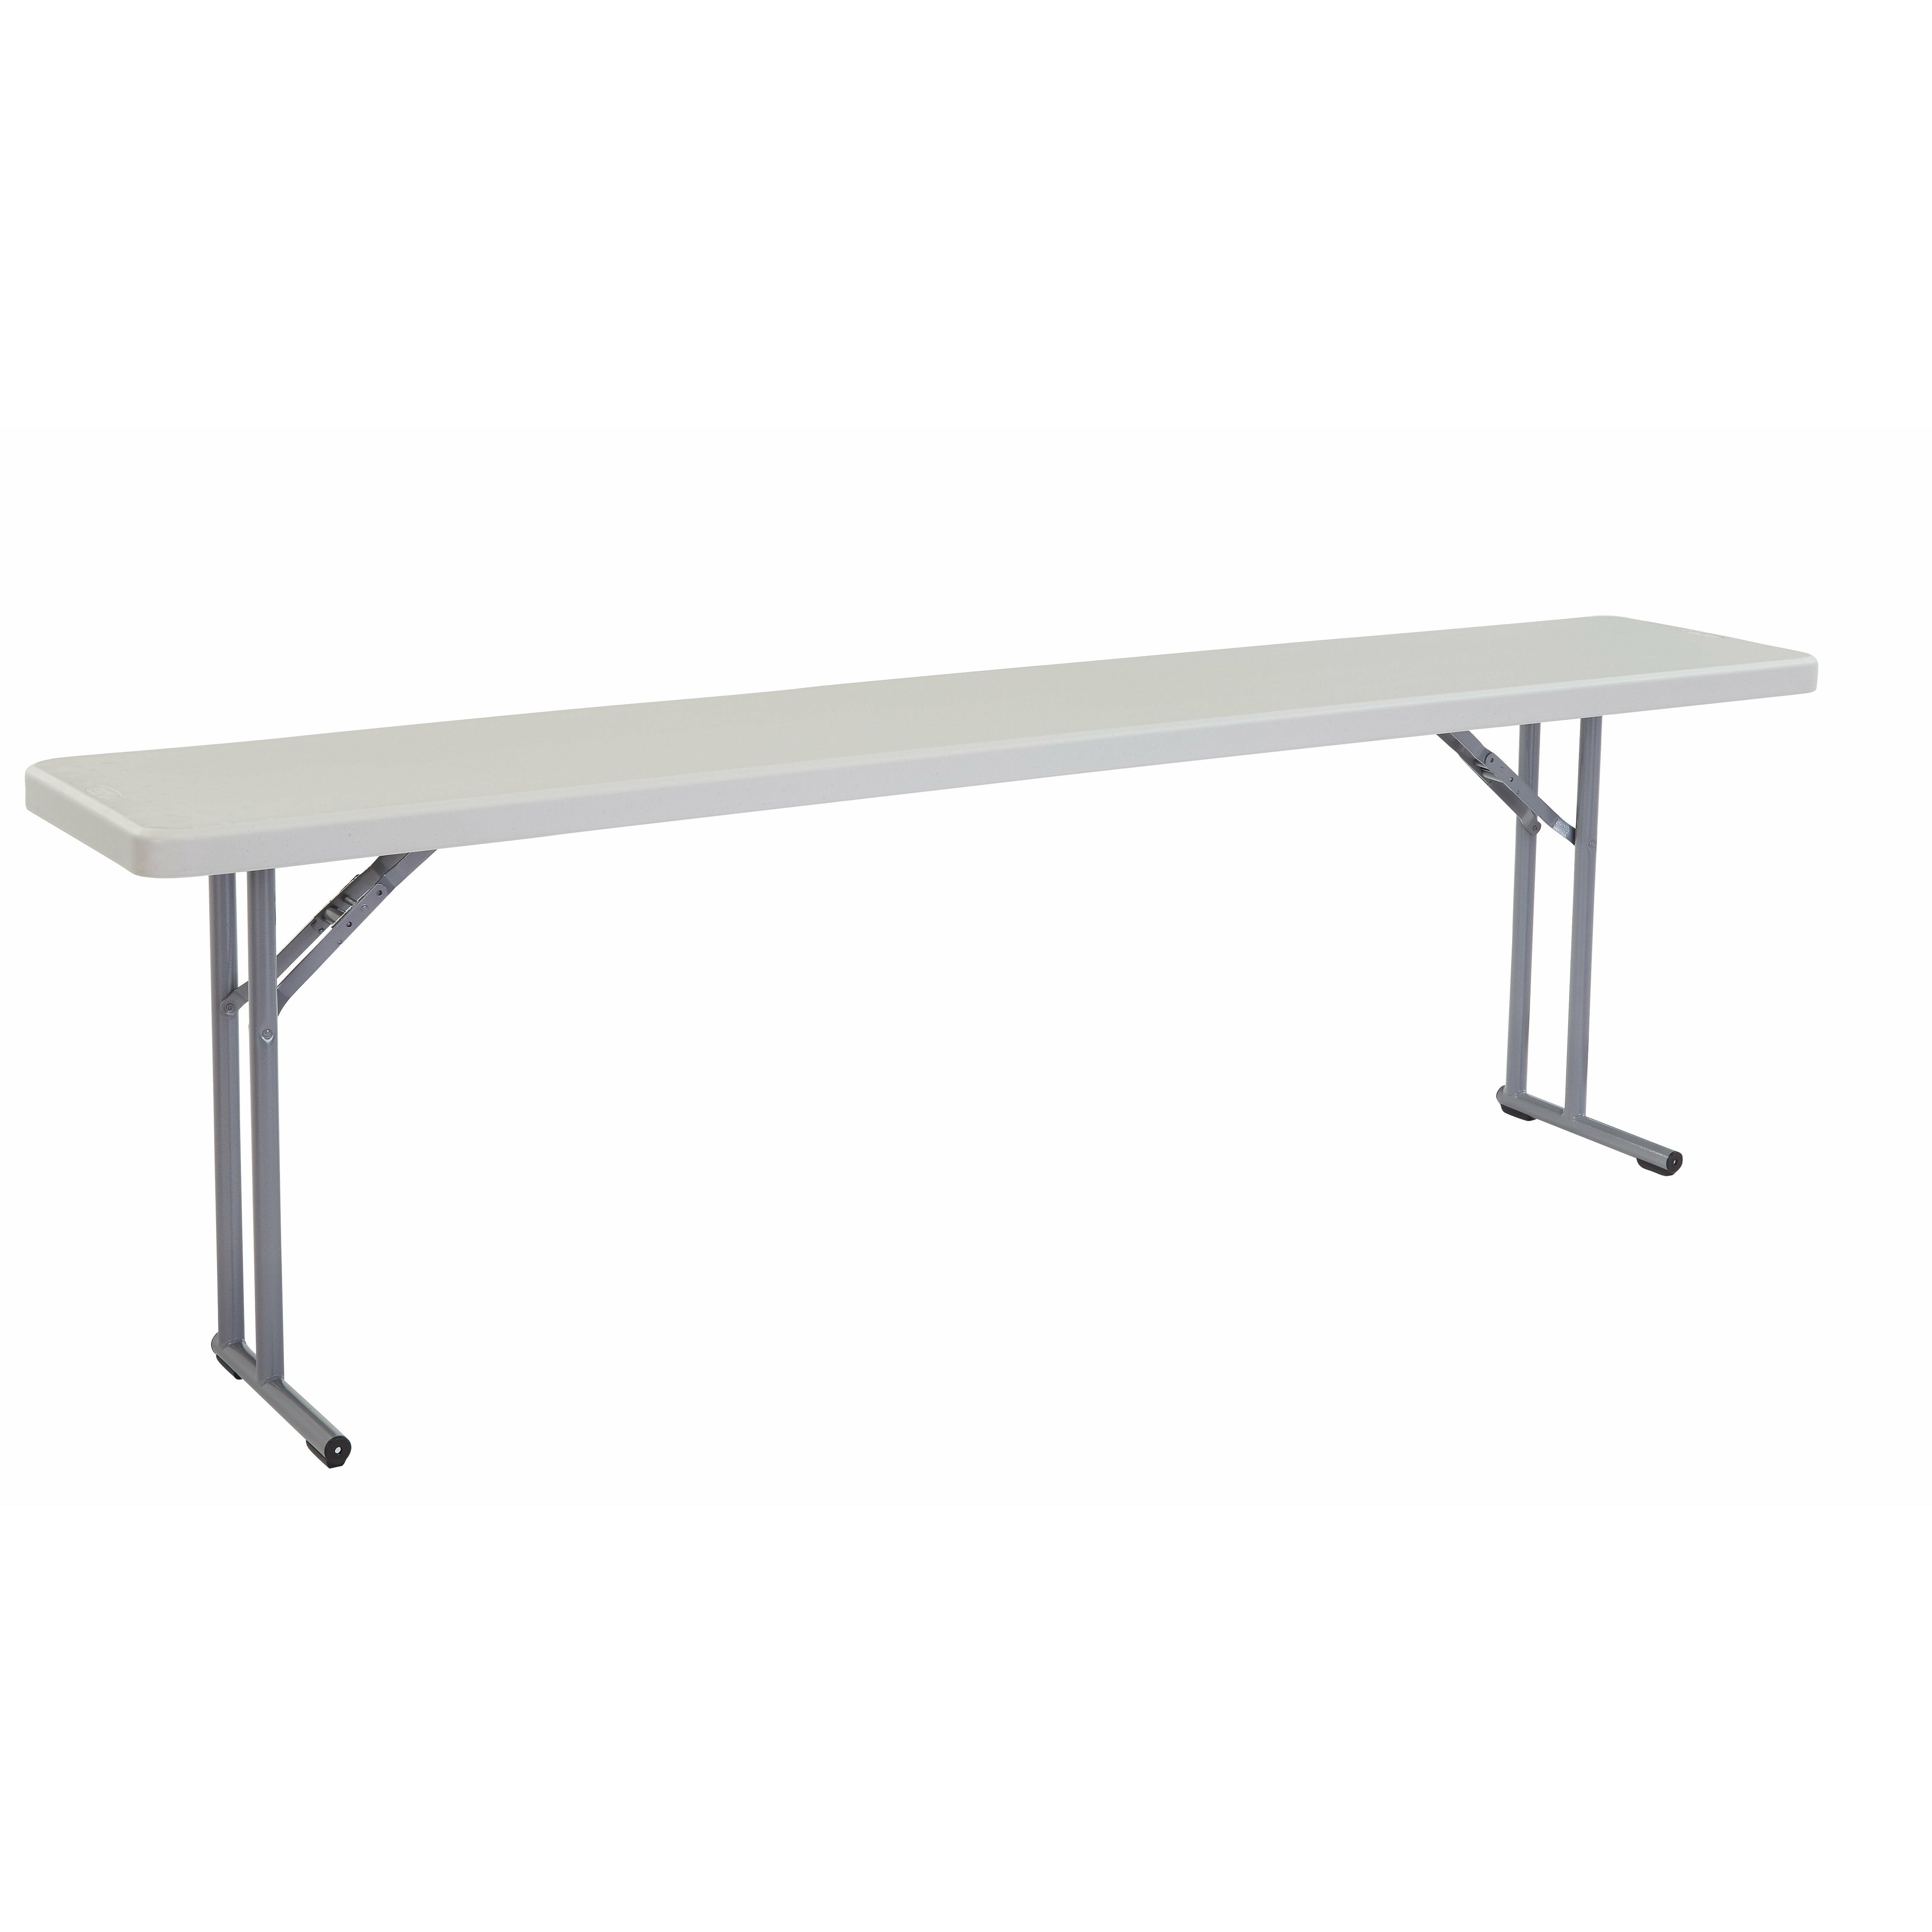 18 x 96 Heavy Duty Seminar Folding Table, Speckled Grey